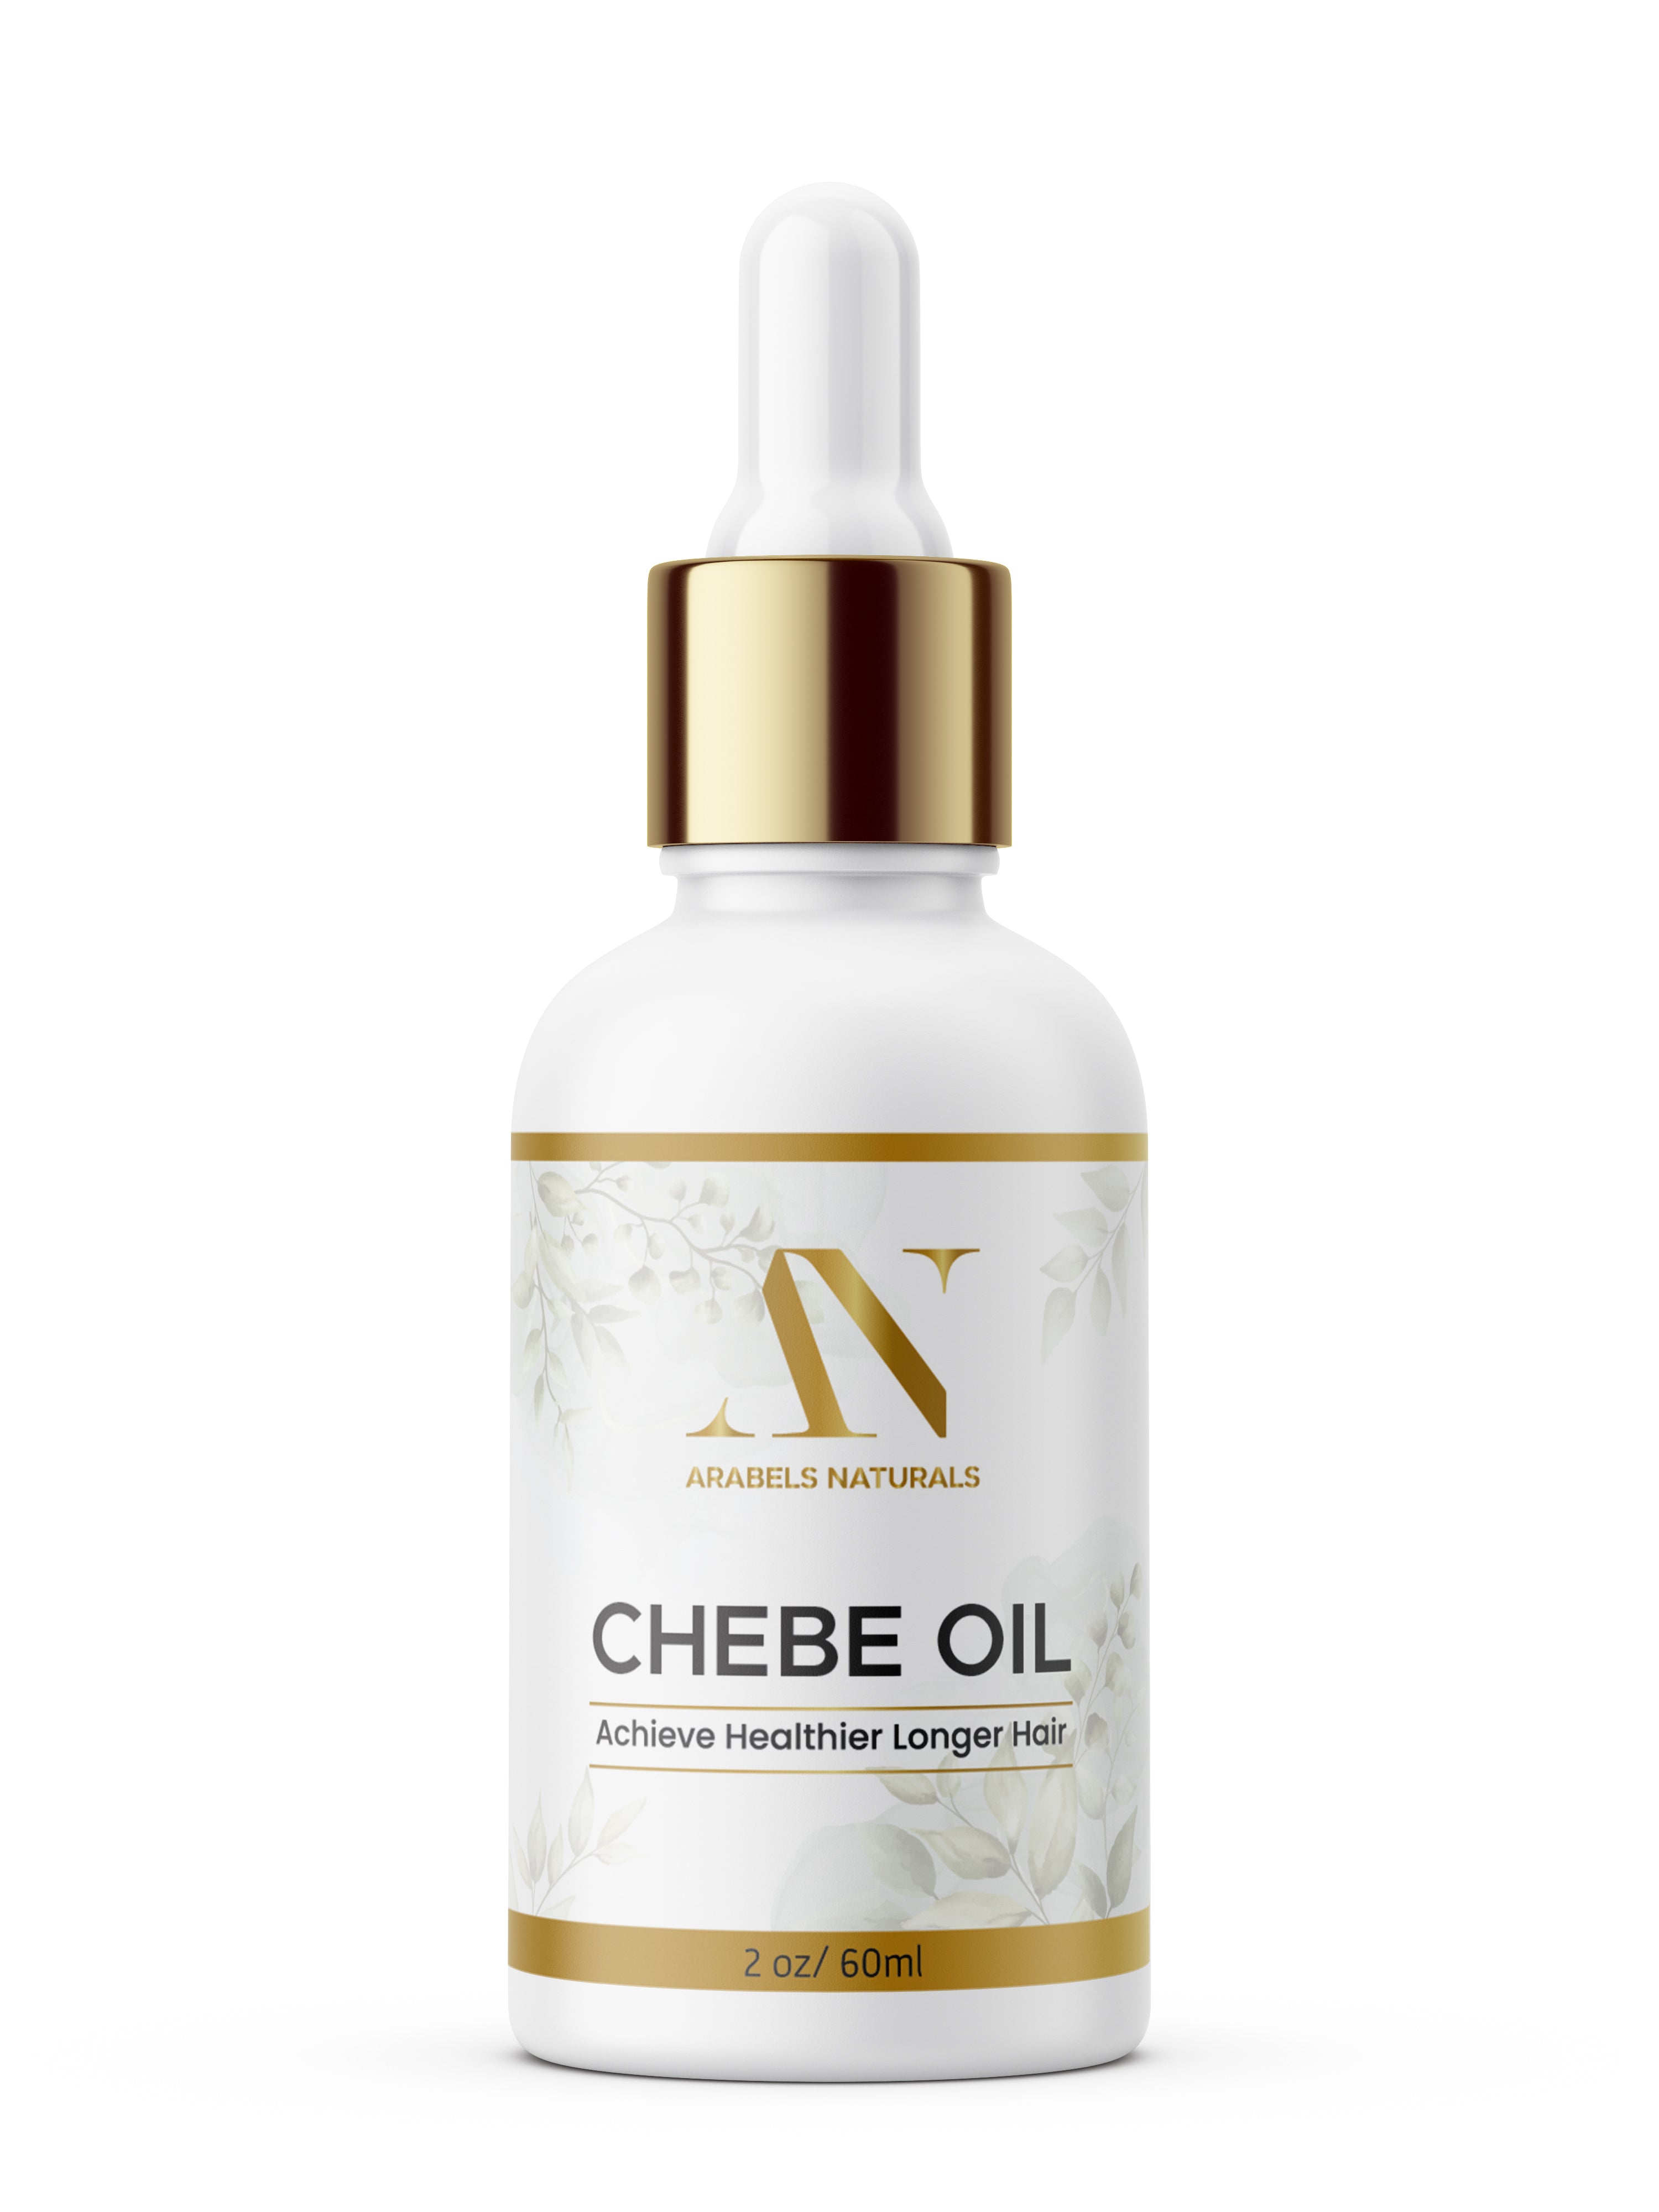 CHEBE HAIR OIL – Arabel's Naturals